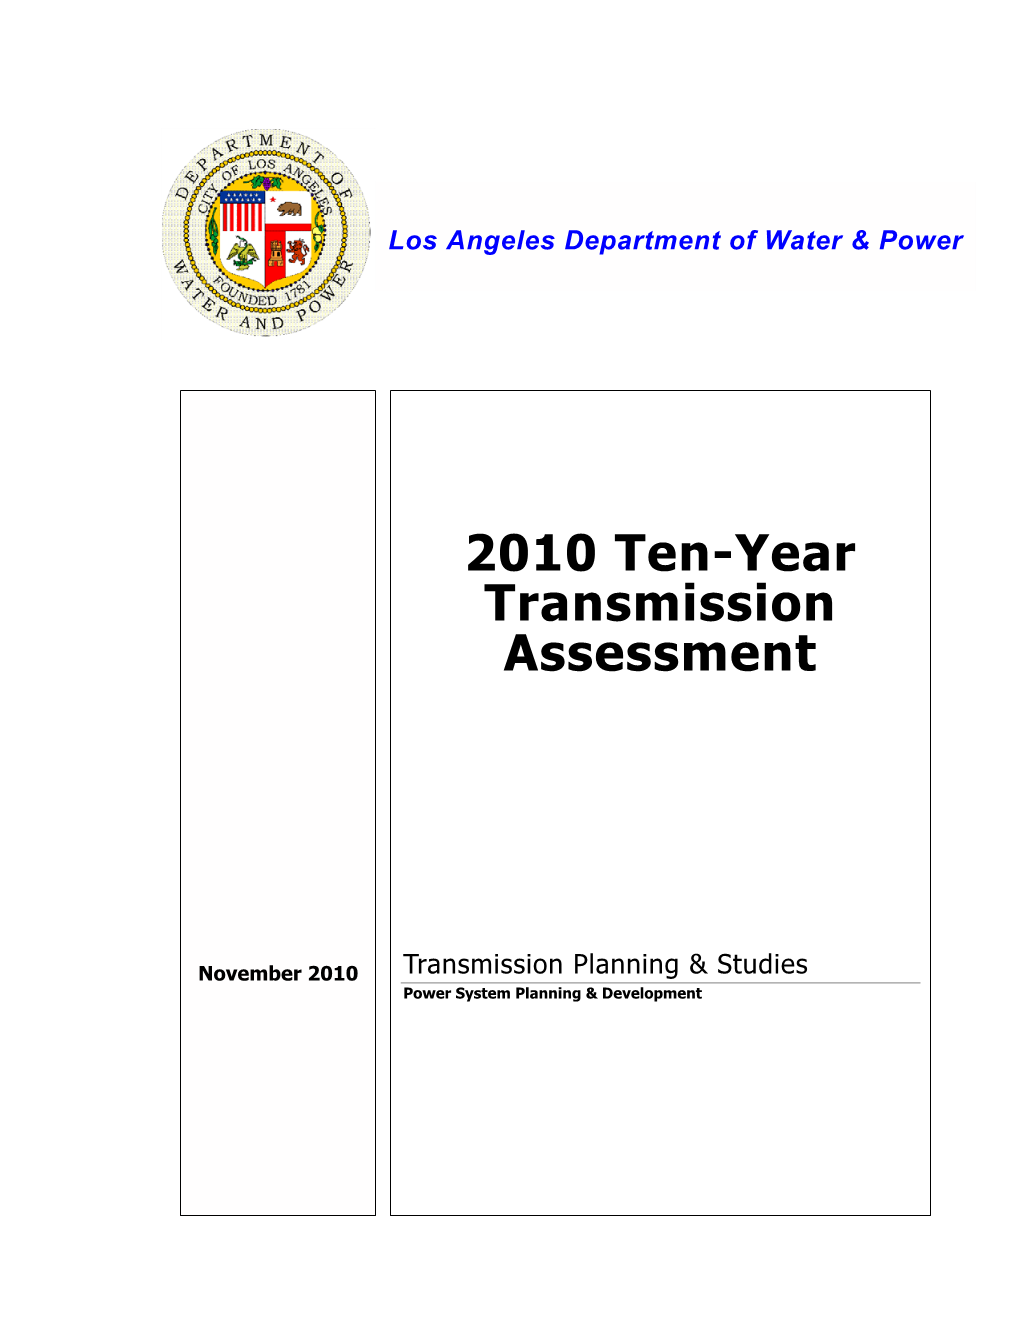 2010 Ten-Year Transmission Assessment